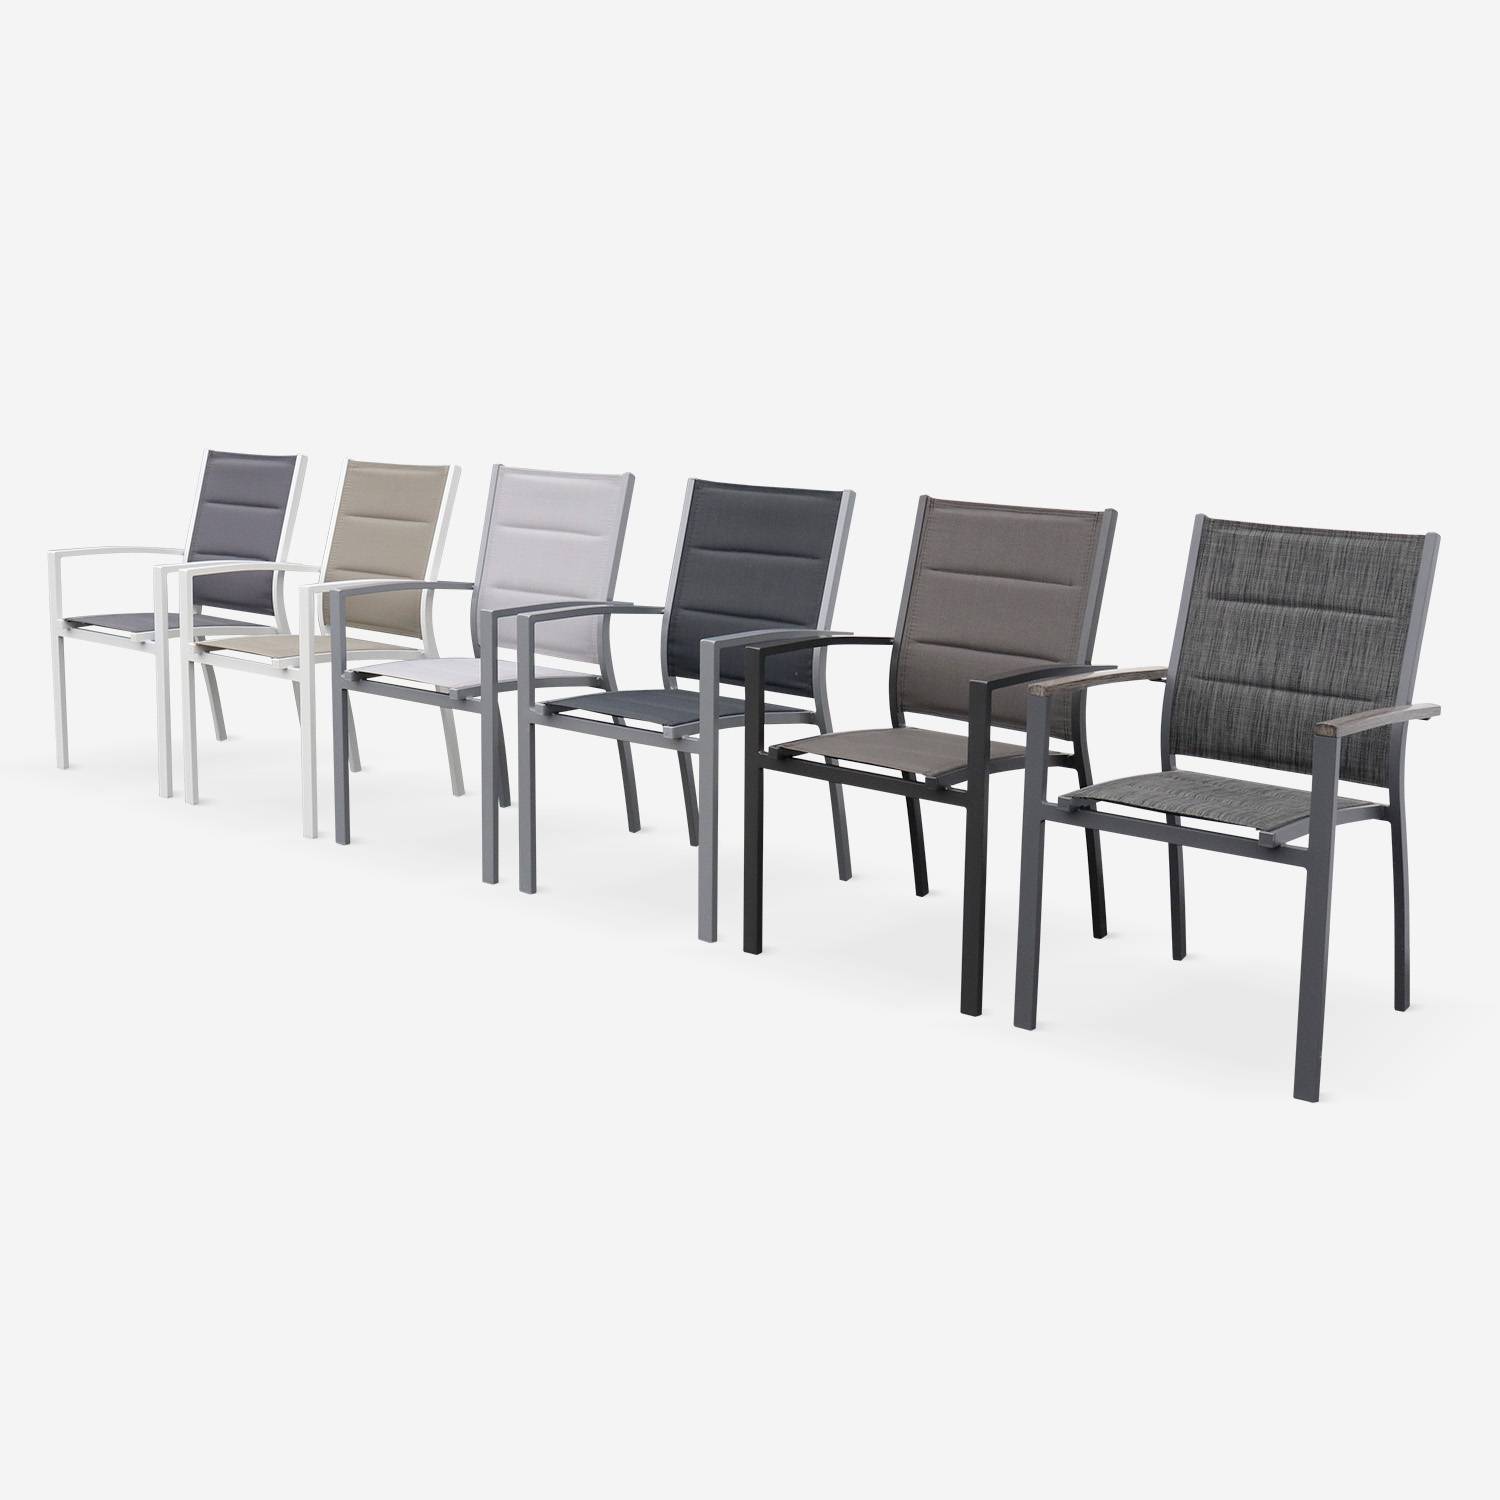 Conjunto de 2 cadeiras - Chicago / Odenton / Philadelphia Antracite - alumínio antracite e textileno cinzento escuro, empilháveis Photo4